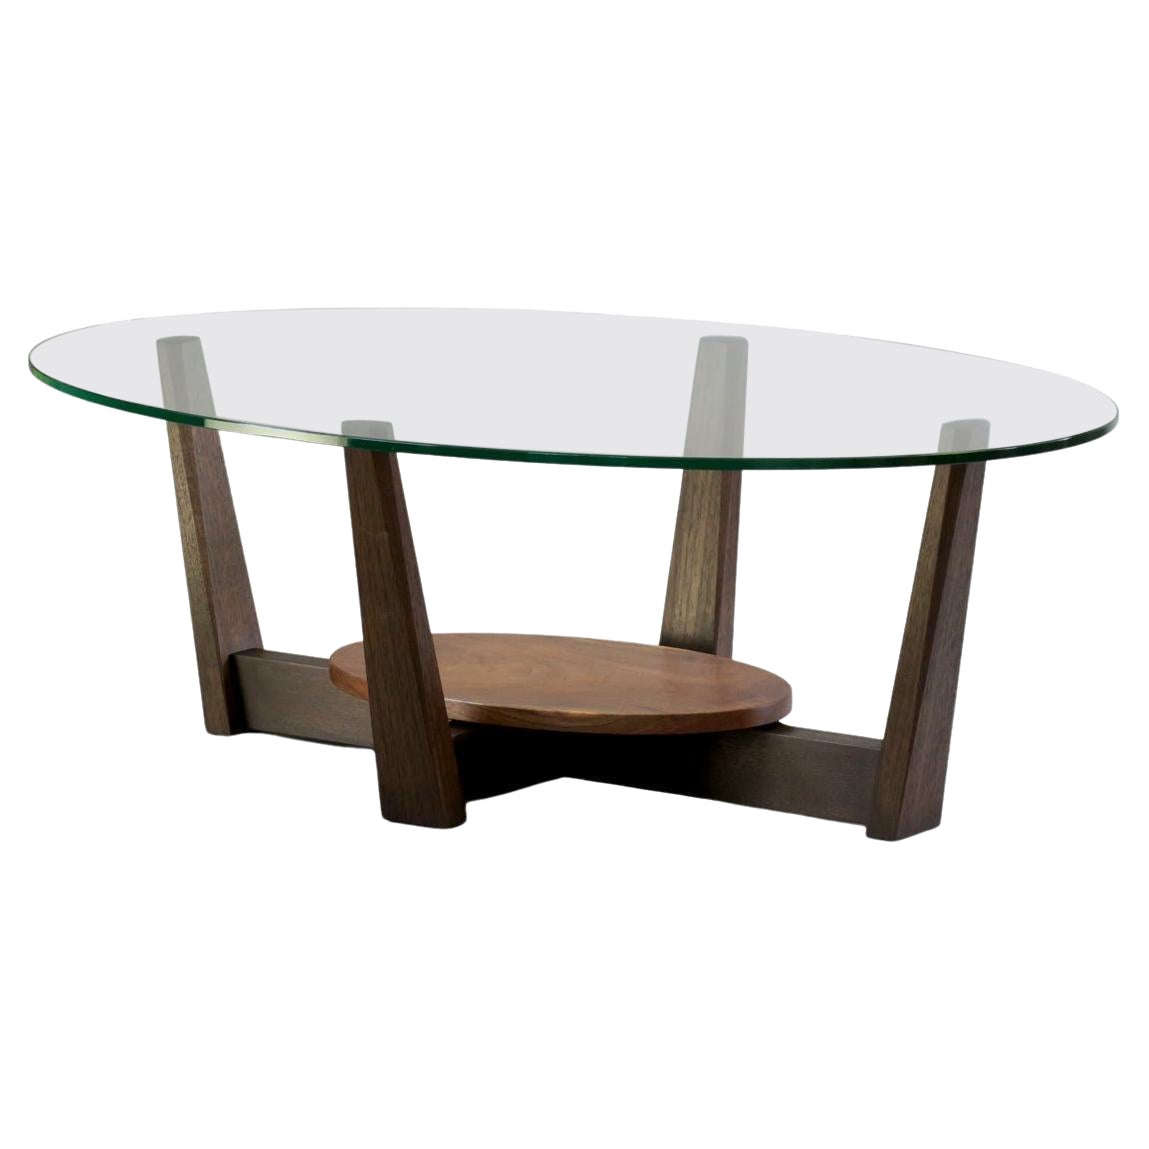 Walnut, Glass Coffee Table -Thomas Throop/ Black Creek Designs - Made to Order